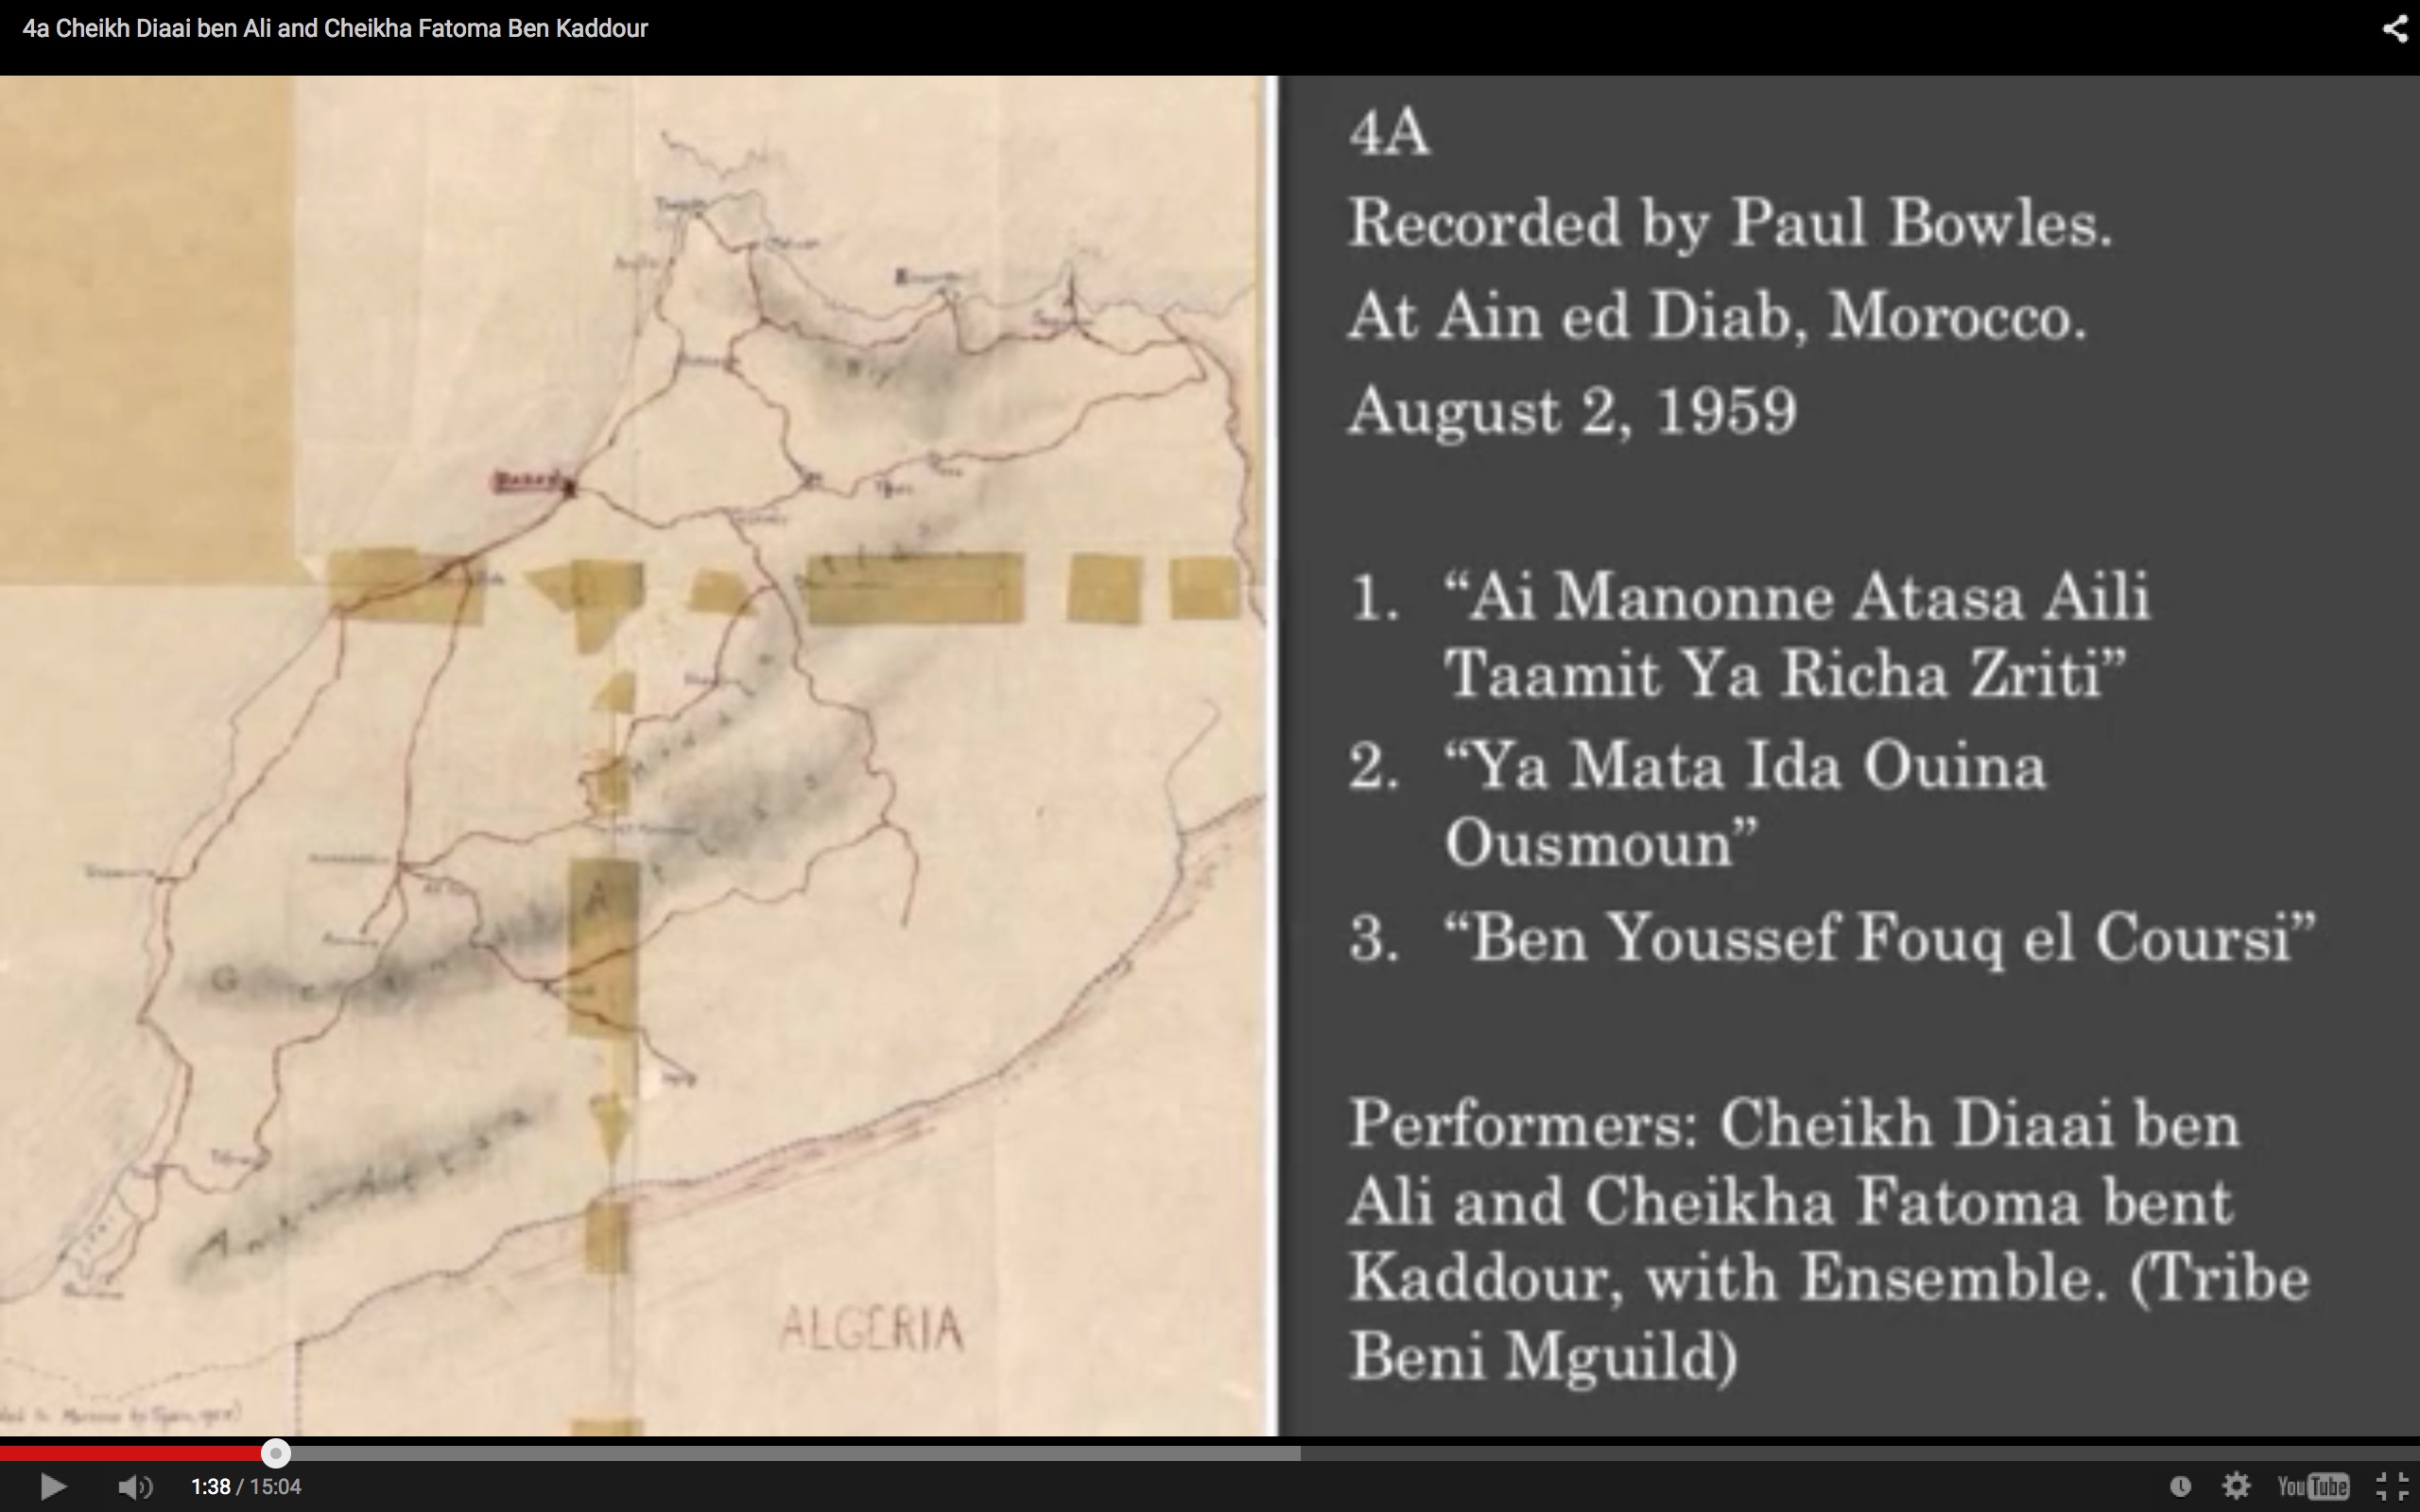 4a
Cheikh Diaai ben Ali and Cheikha Fatoma Ben Kaddour with ensemble
Recorded in Aïn Diab, Morocco on August 2, 1959 by Paul Bowles

